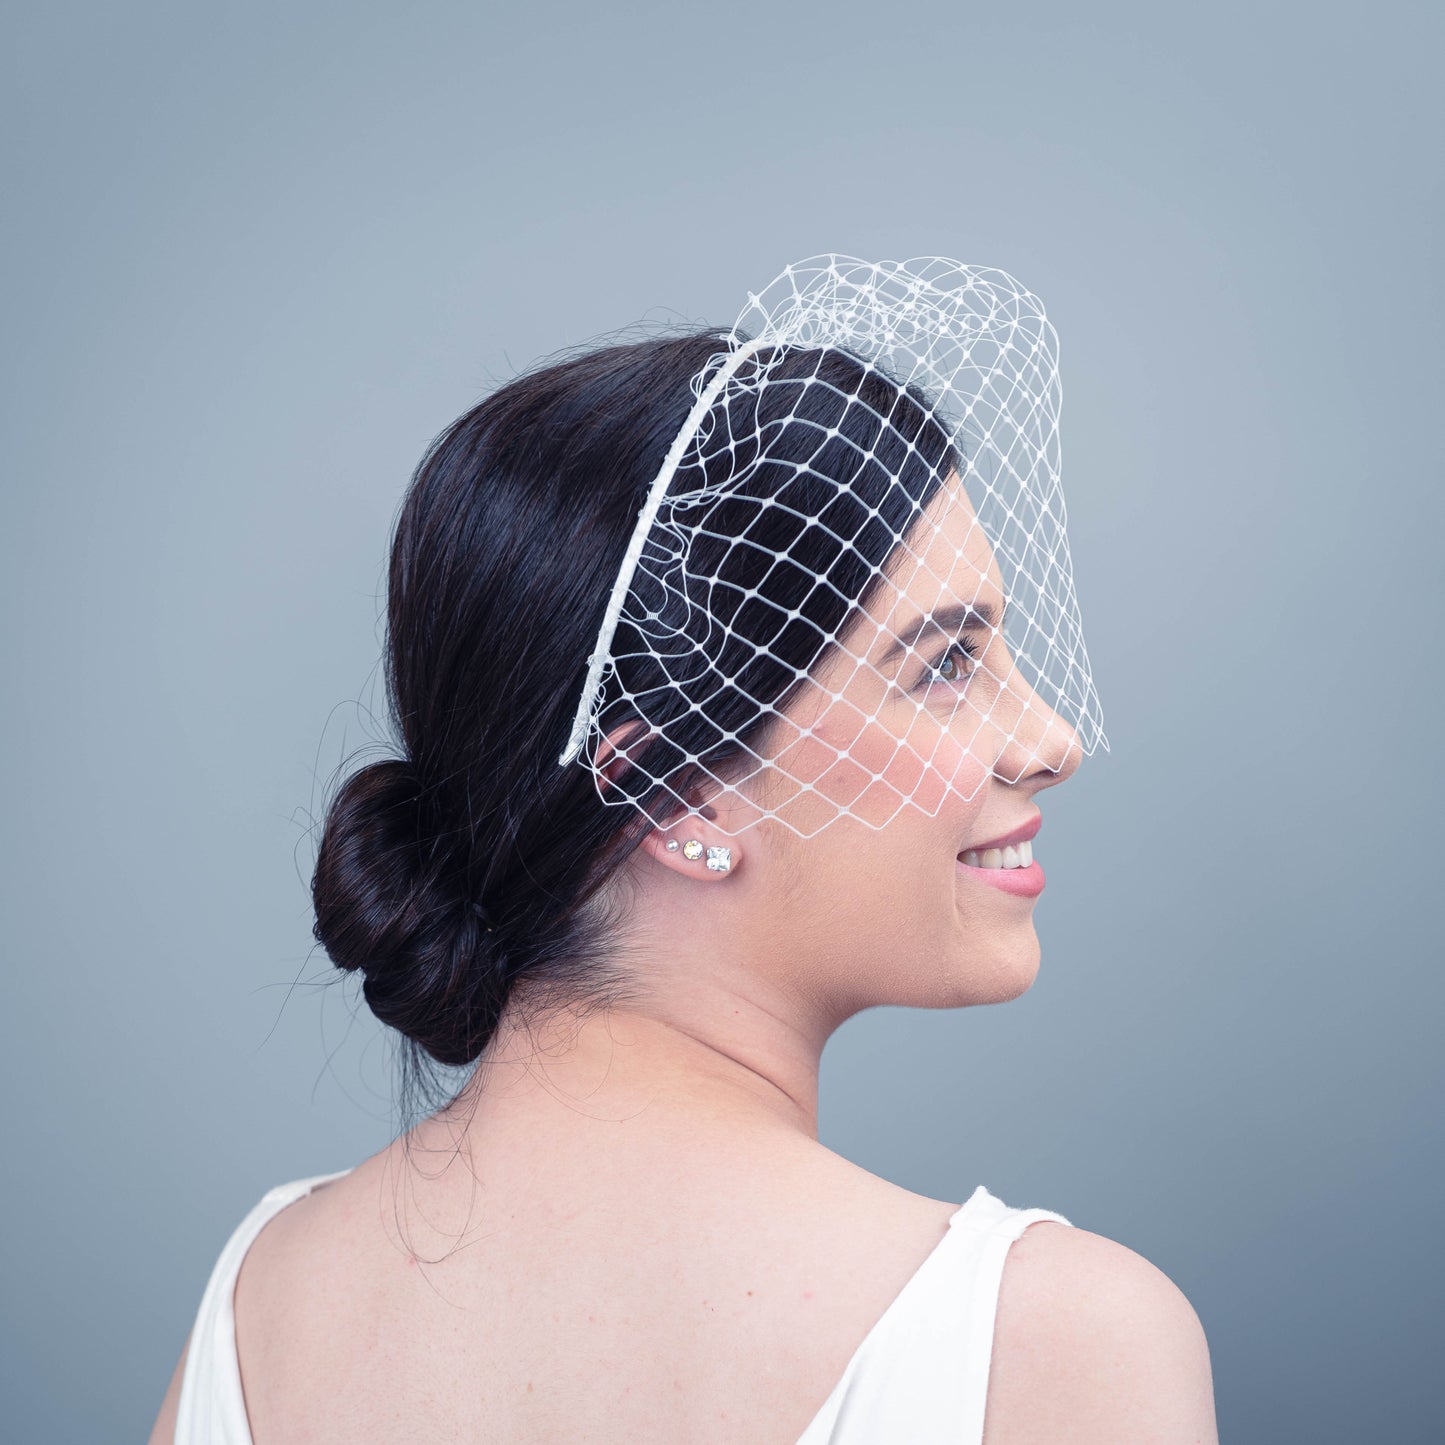 All of Me bridal birdcage veil on headband in white veiling